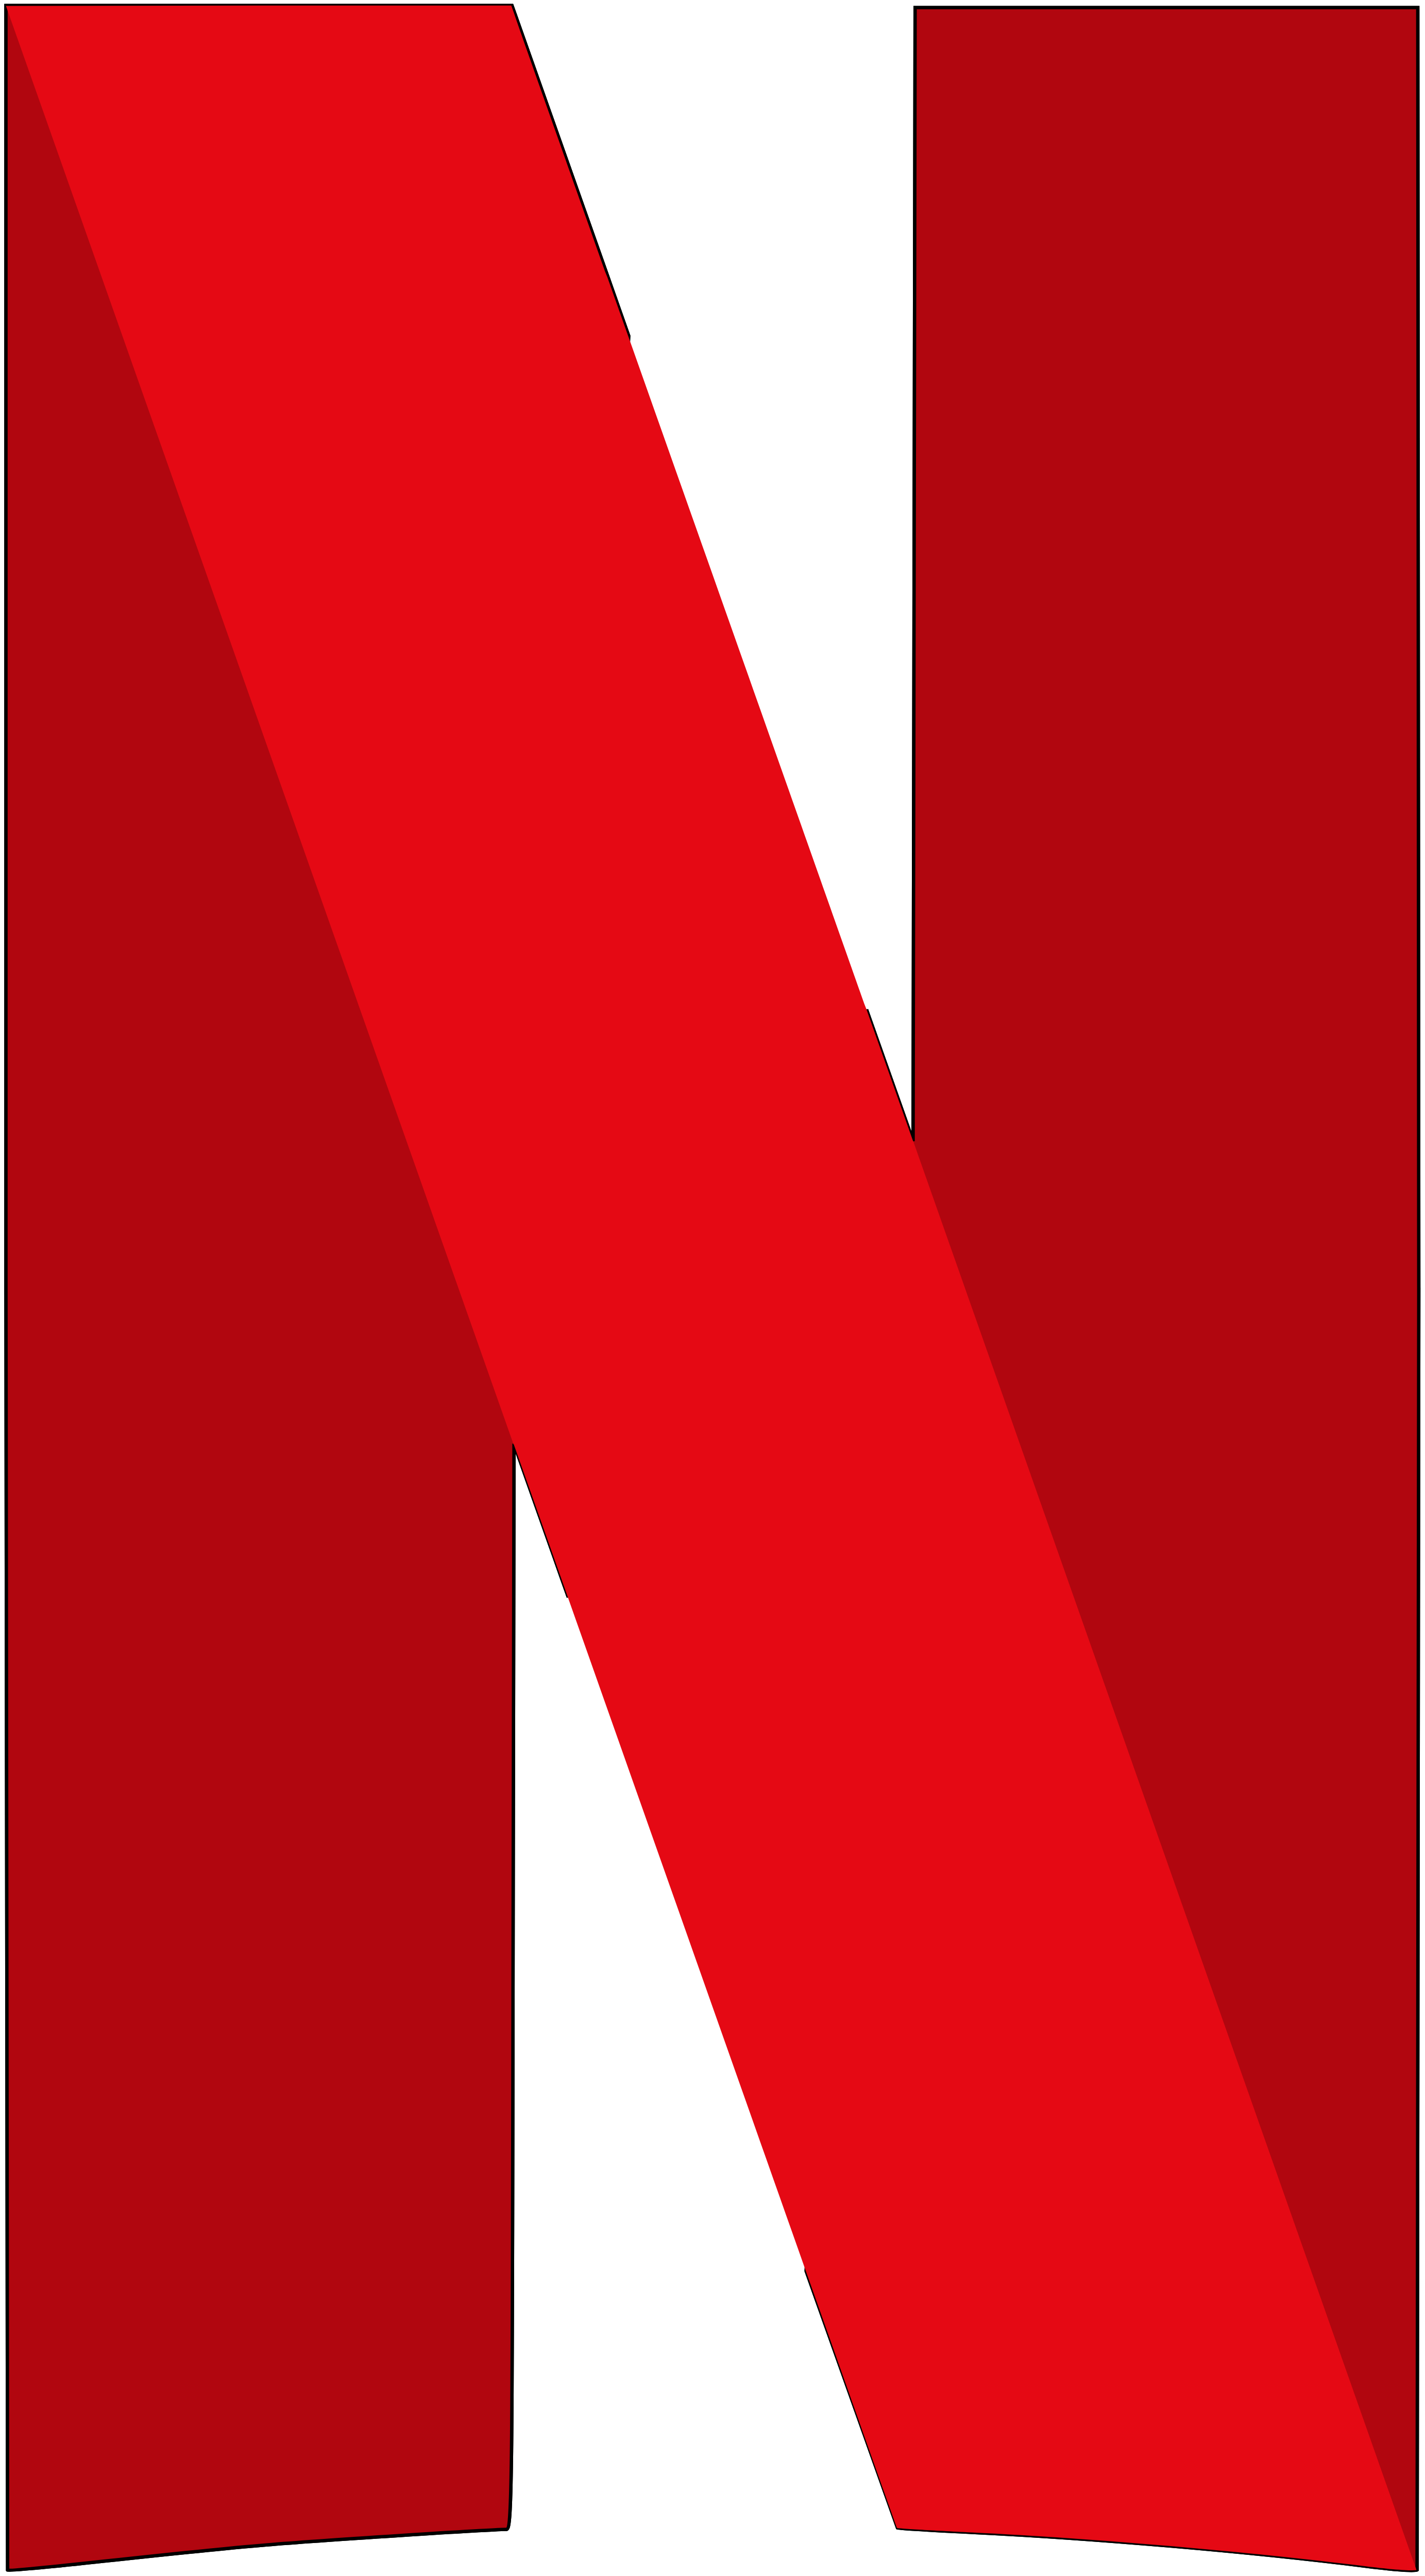 Netflix N Logo PNG High Definition Photo Image pngteam.com